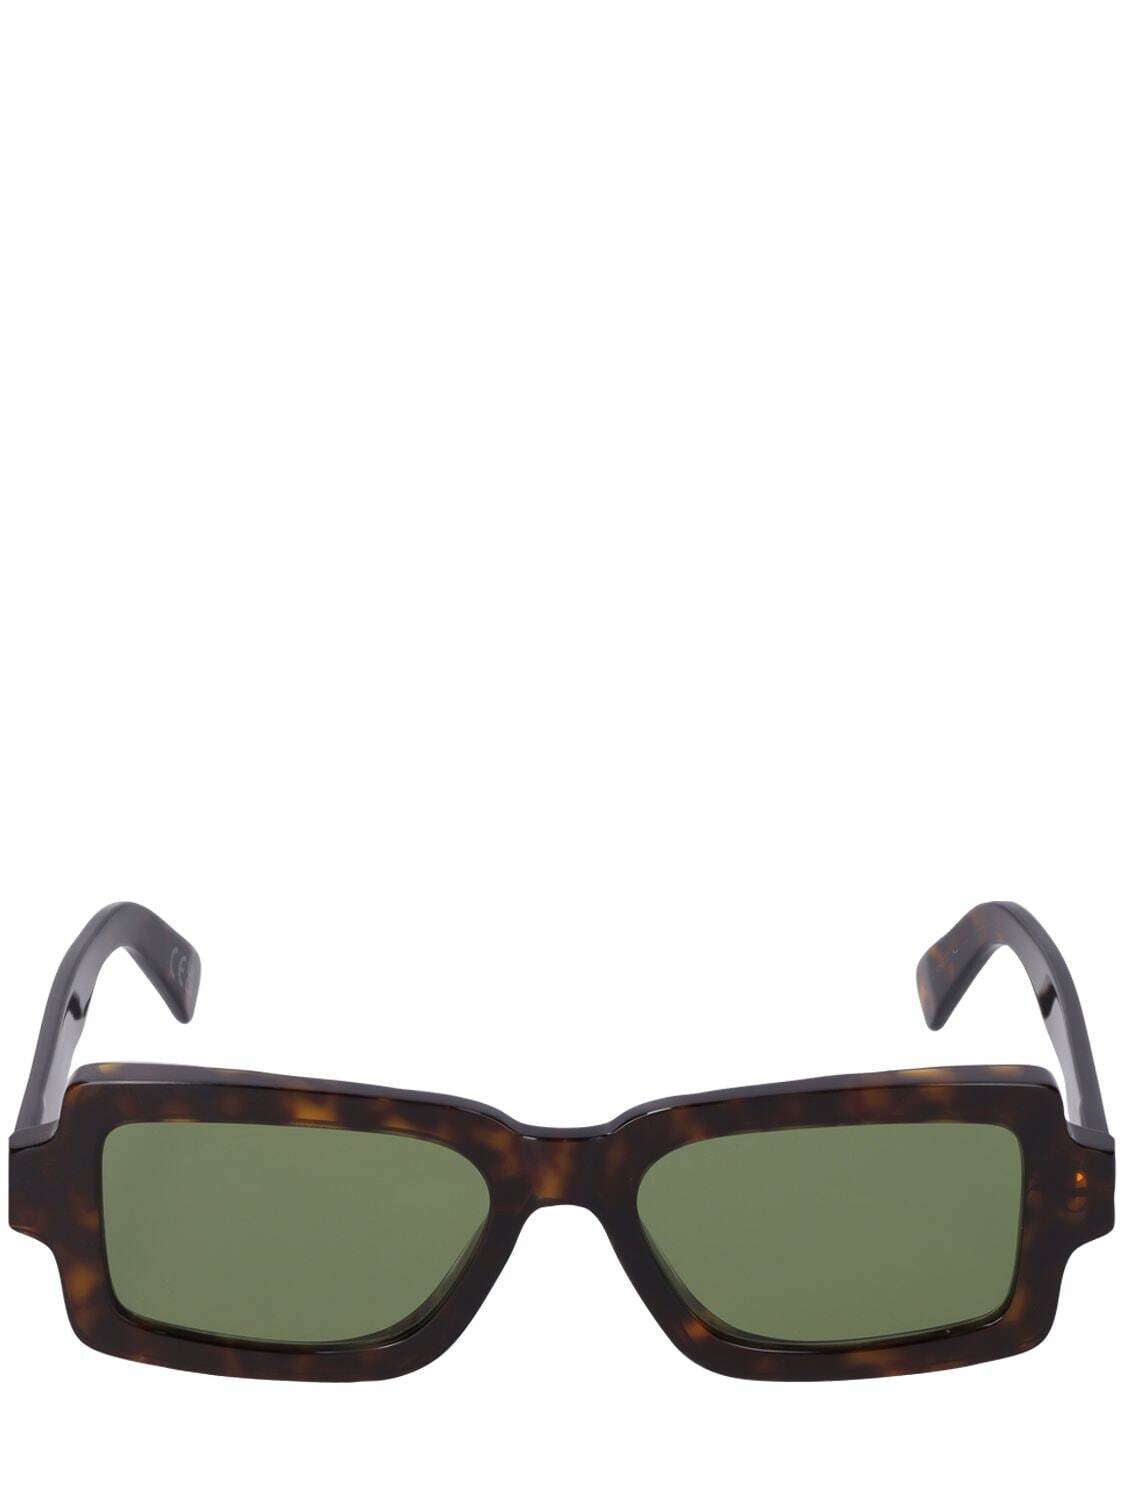 RETROSUPERFUTURE Pilastro 3627 Squared Acetate Sunglasses in green